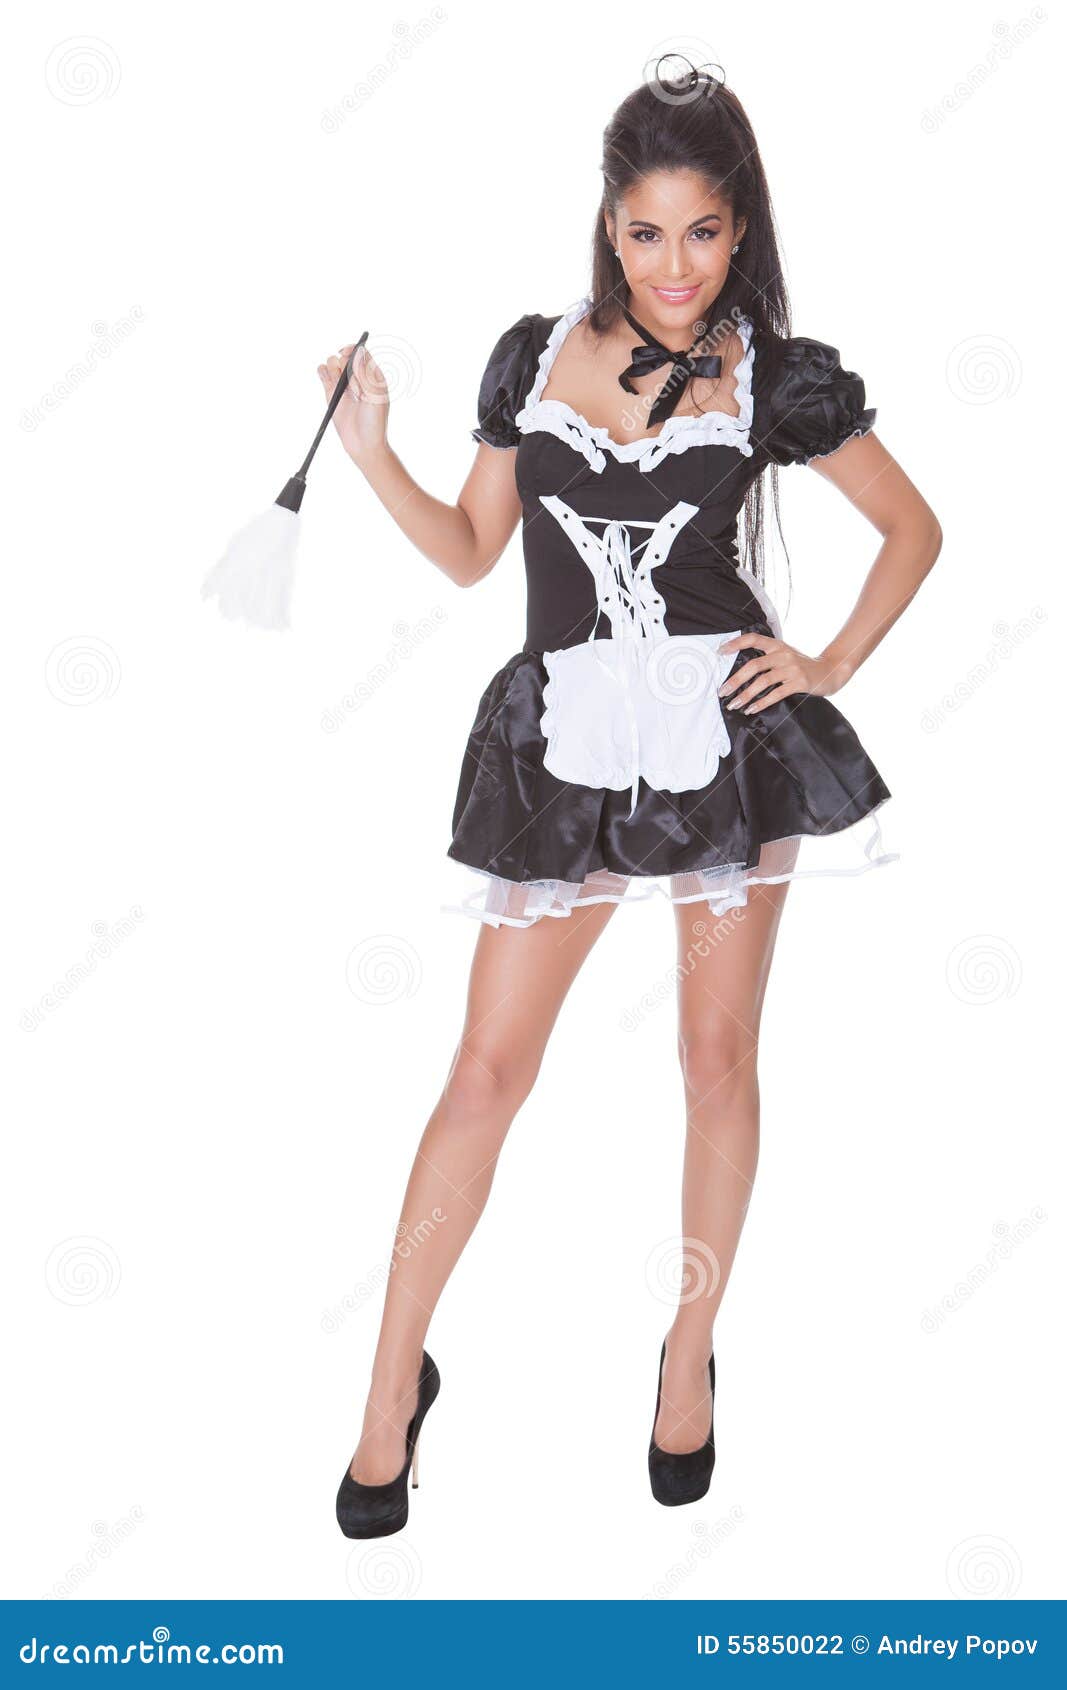 maid in skimpy uniform